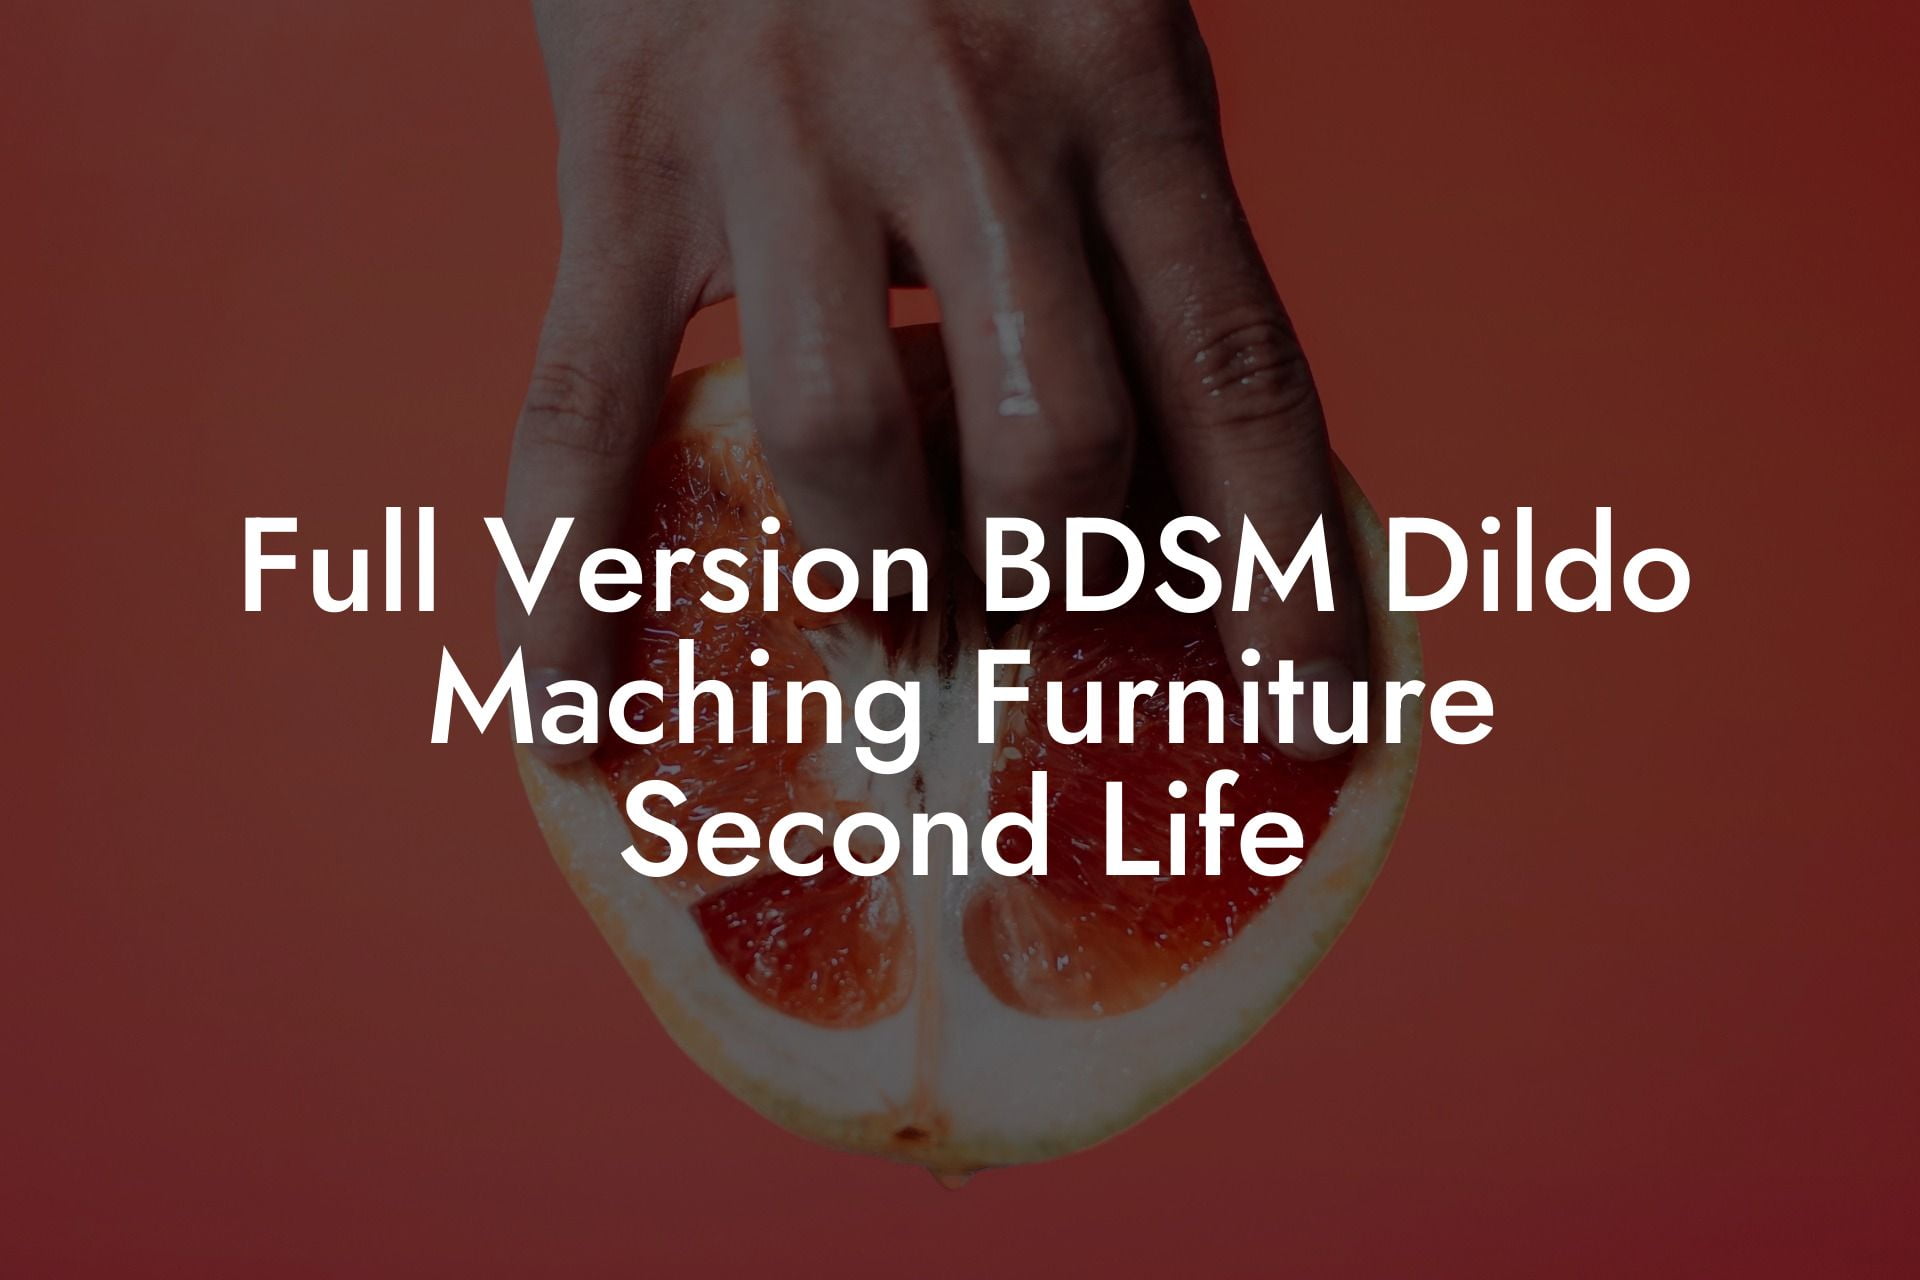 Full Version BDSM Dildo Maching Furniture Second Life